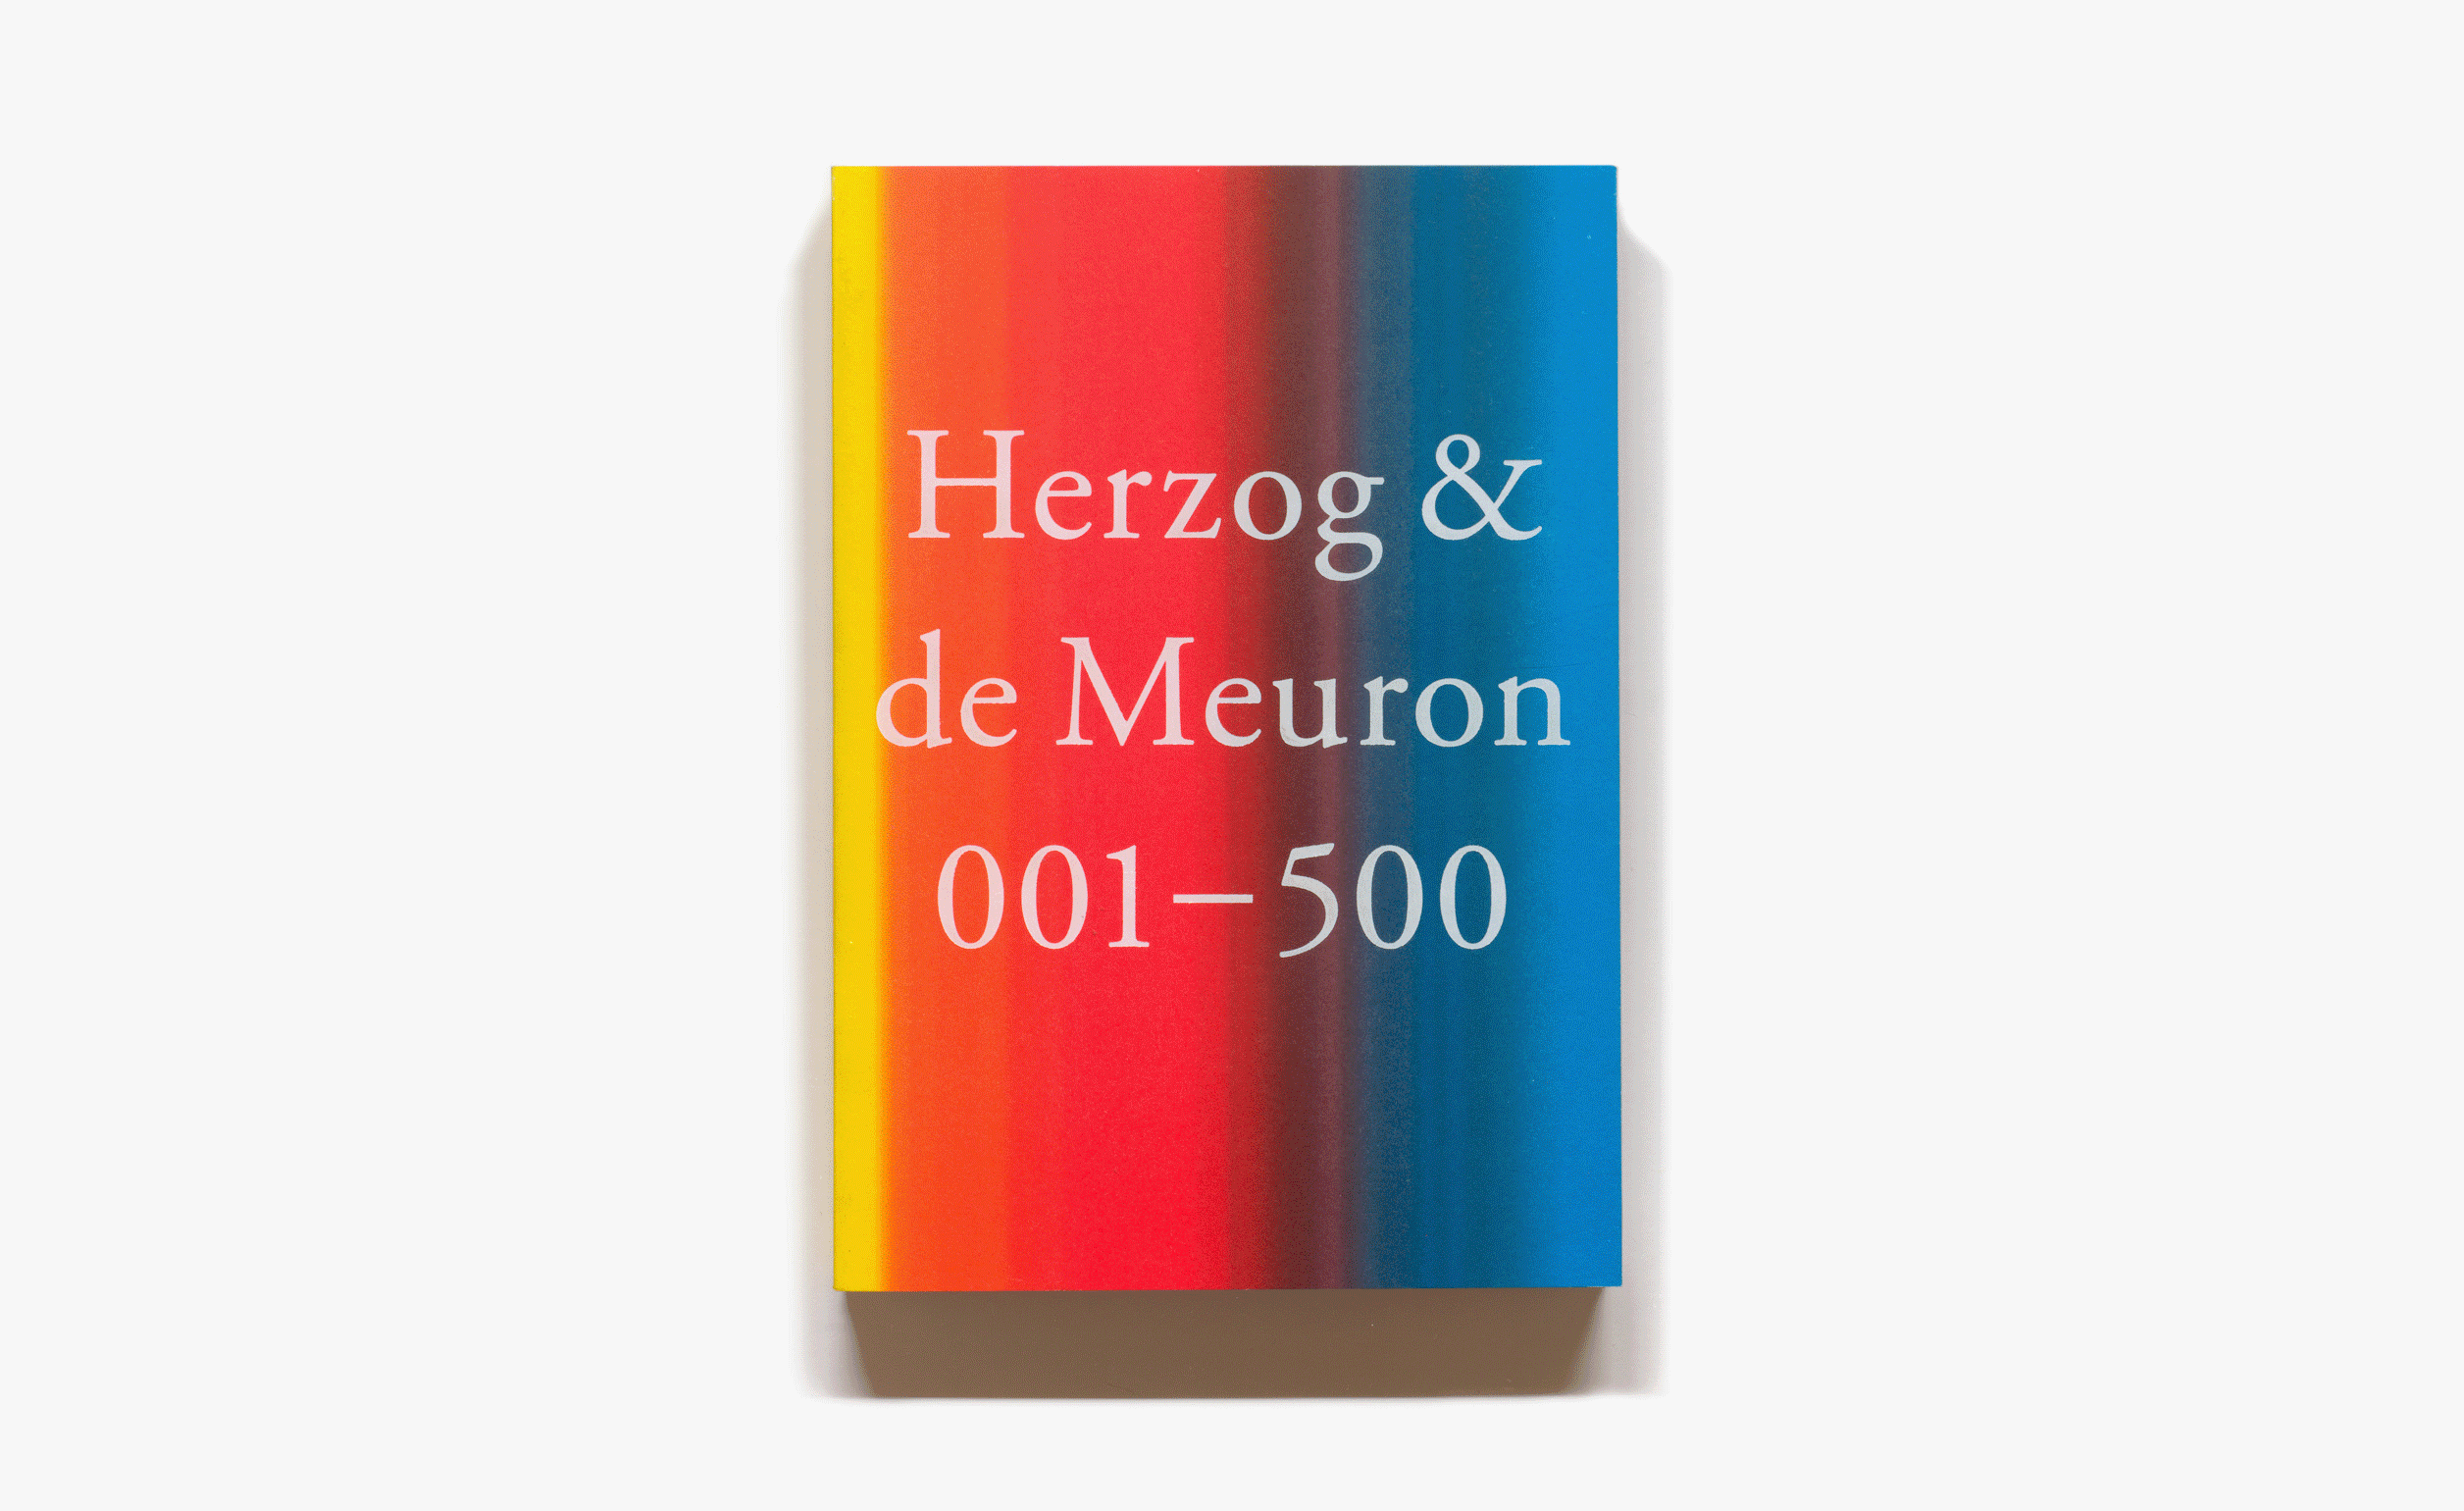 Simonett & Baer indexes the work of Herzog & de Meuron | Wallpaper